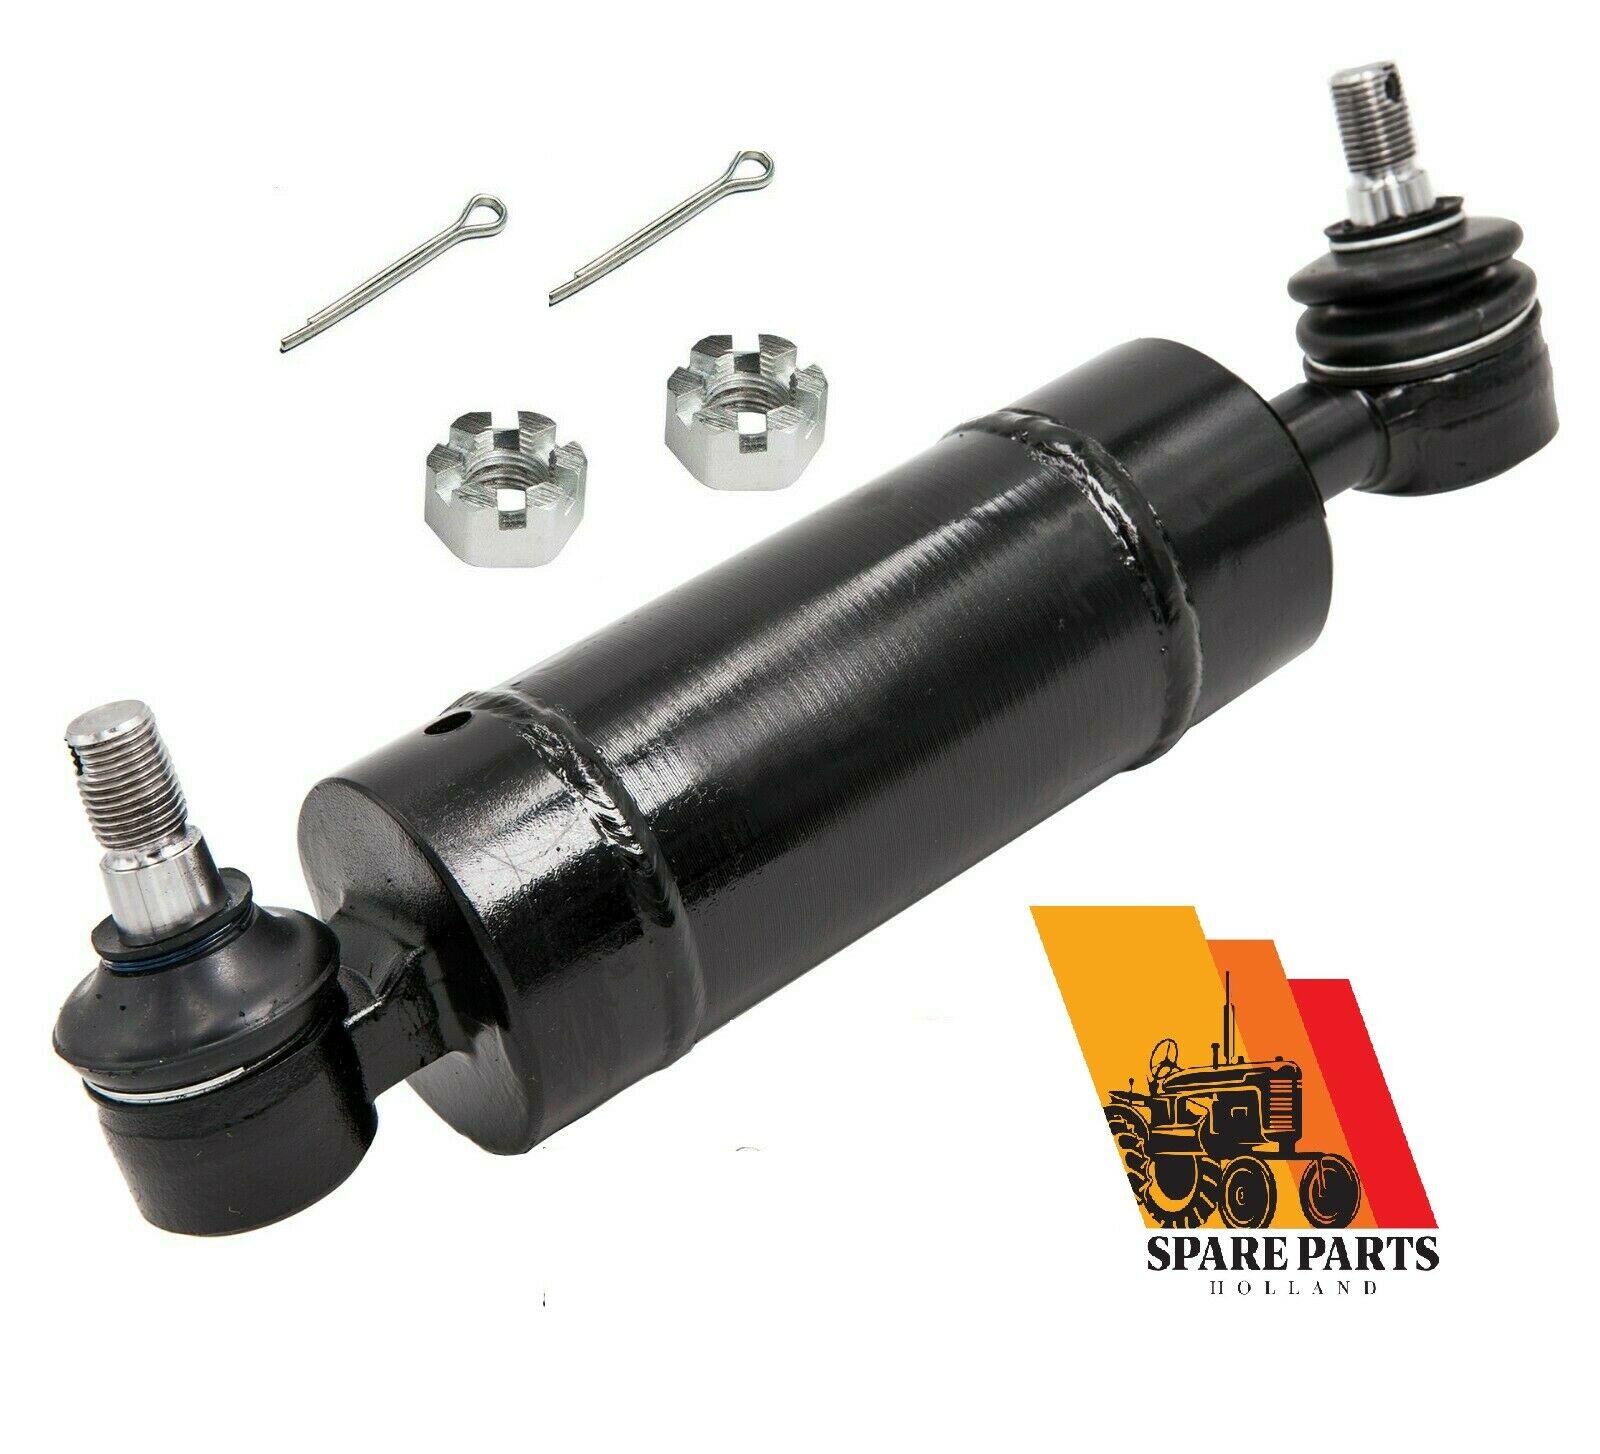 AM118795 AM147173 – Power Steering Cylinder for John Deere AWS 425B 445D 455E – 4W Steering